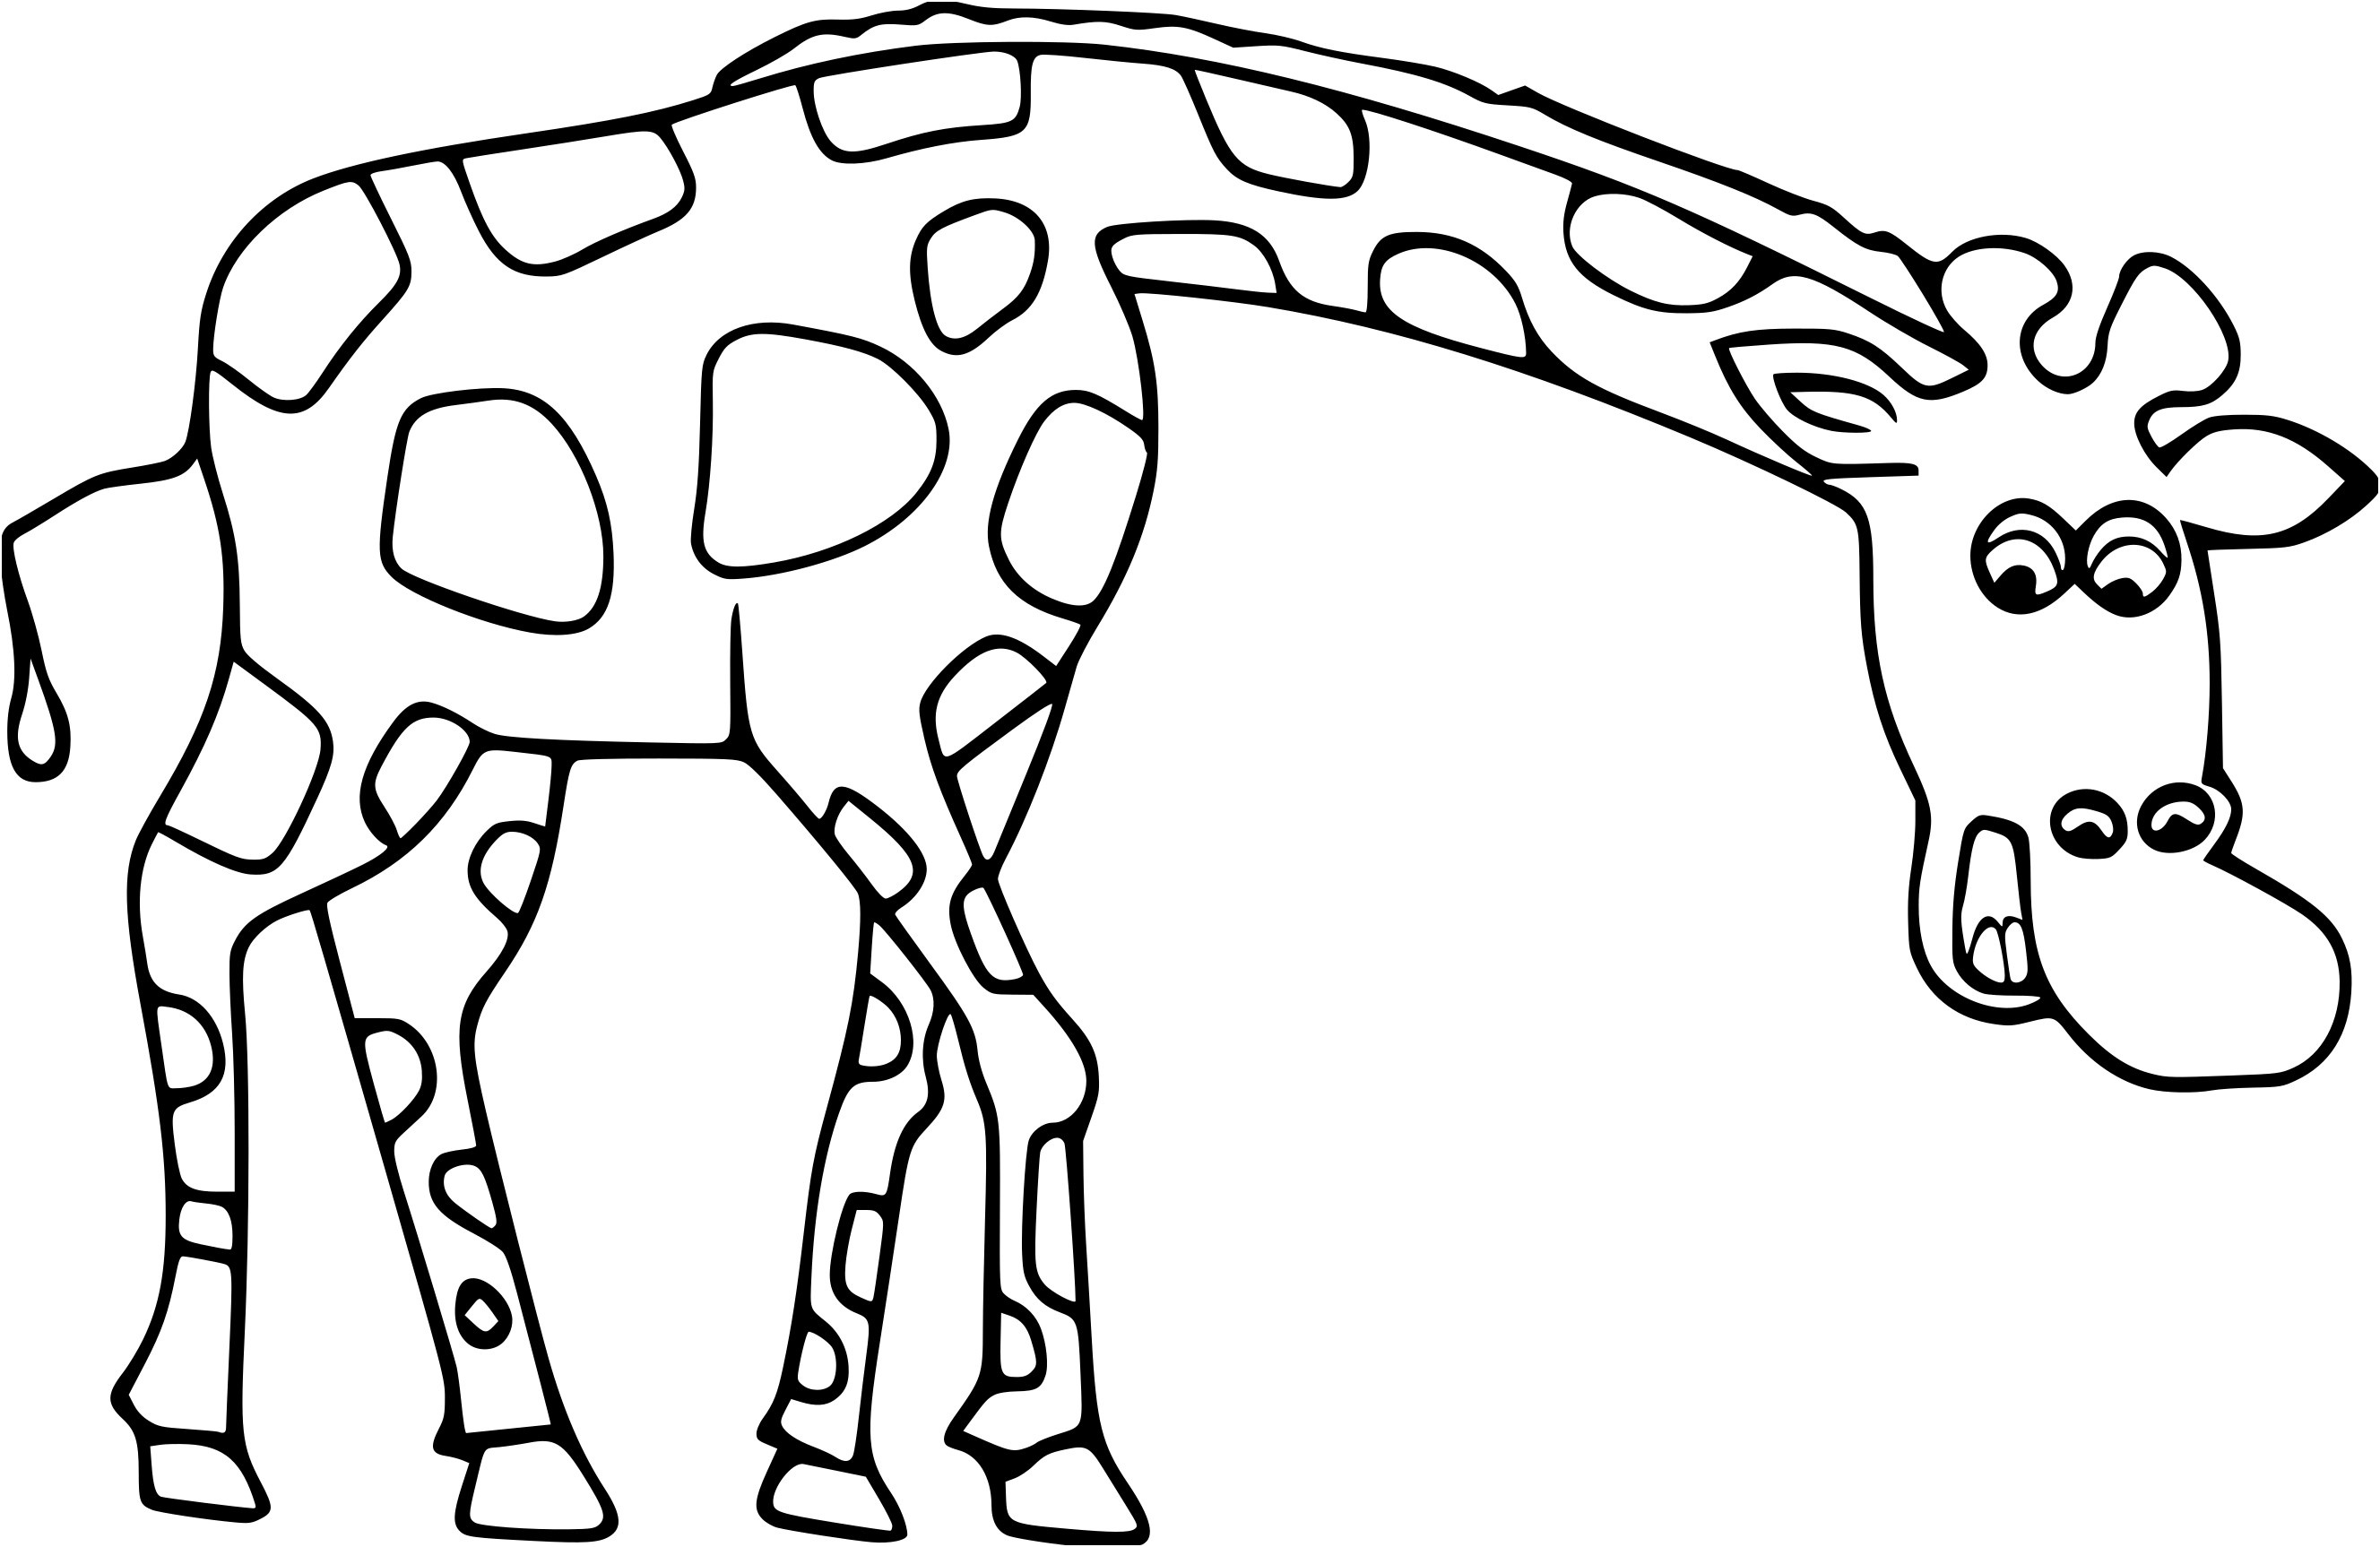 Шаблон жирафа для раскрашивания